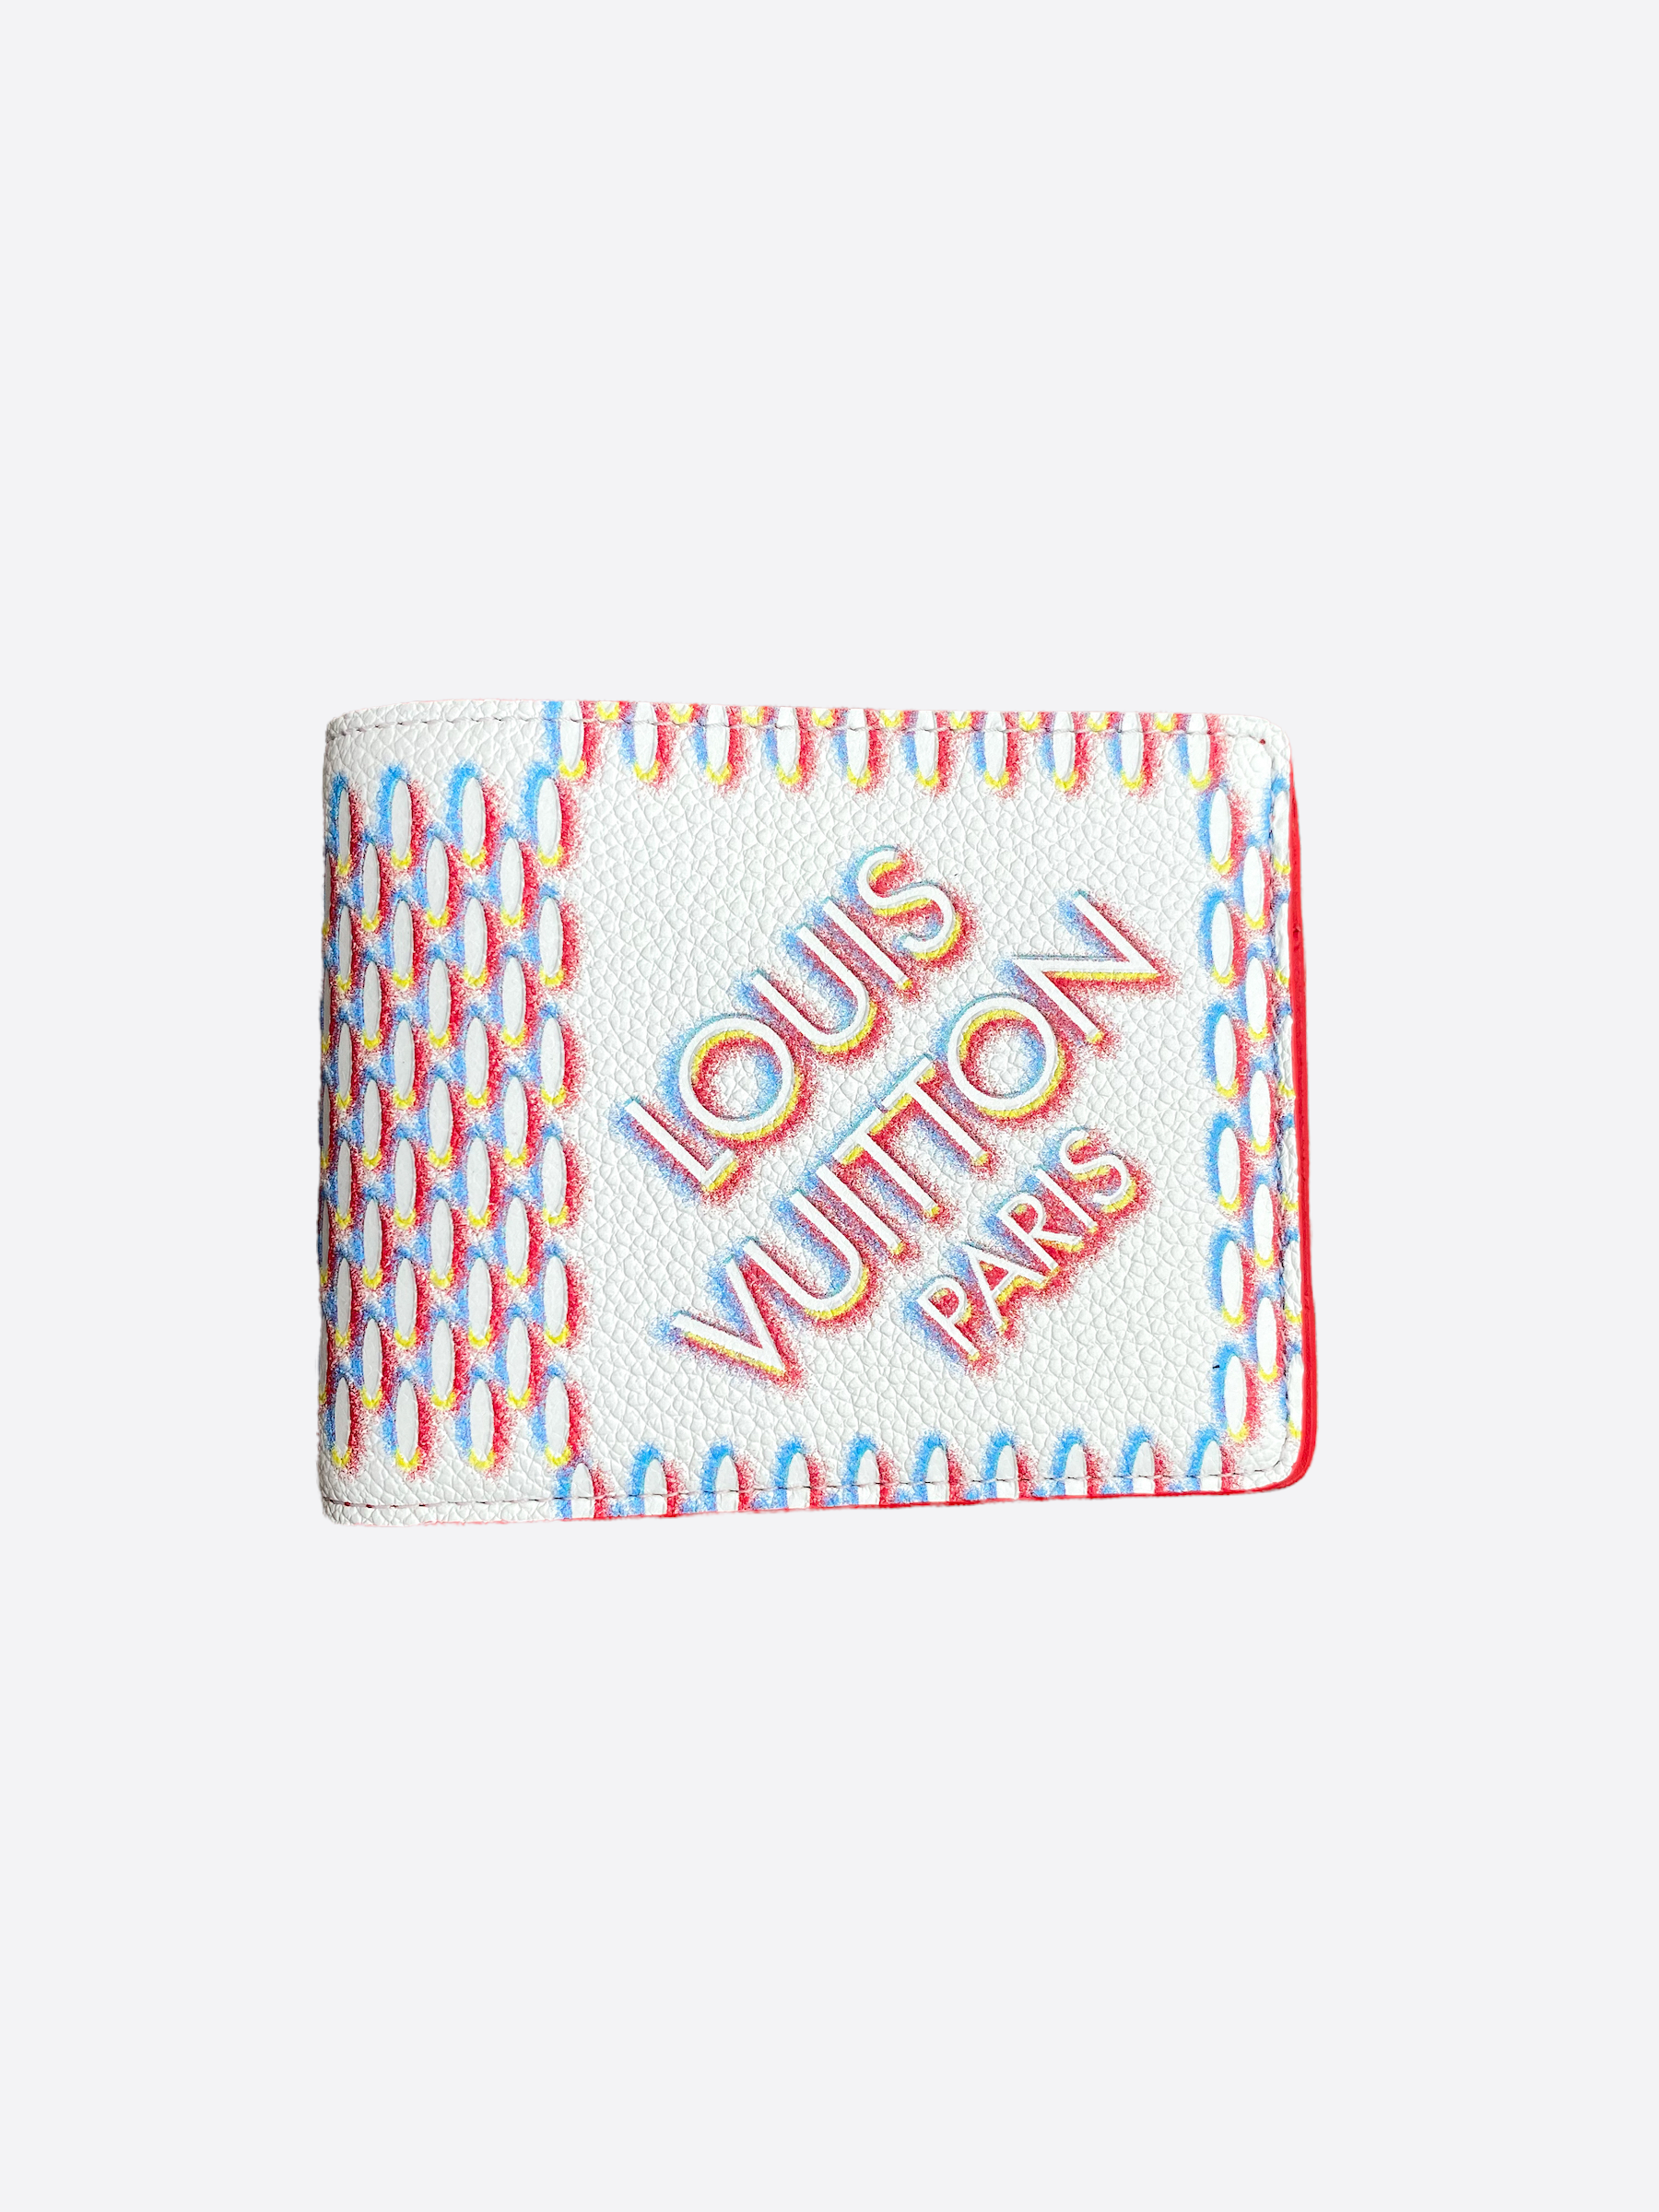 Louis Vuitton White Damier Spray Double Zipped Card Holder